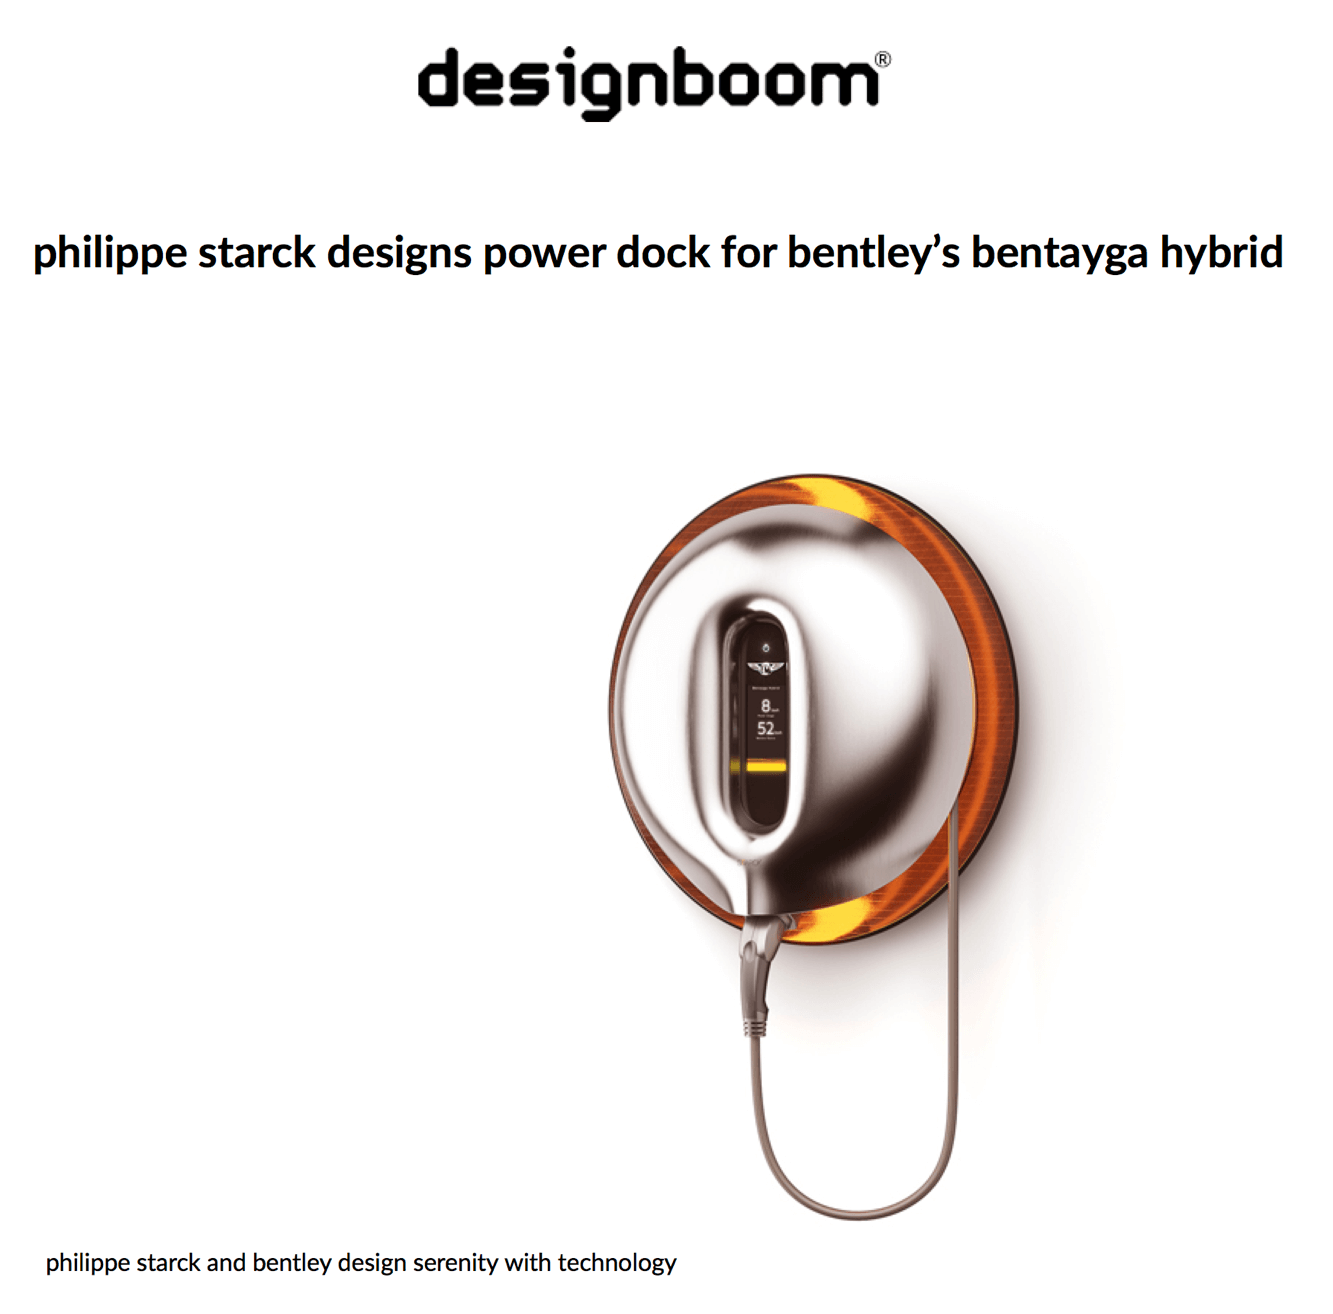 Philippe Starck designs power dock for bentley’s bentayga hybrid